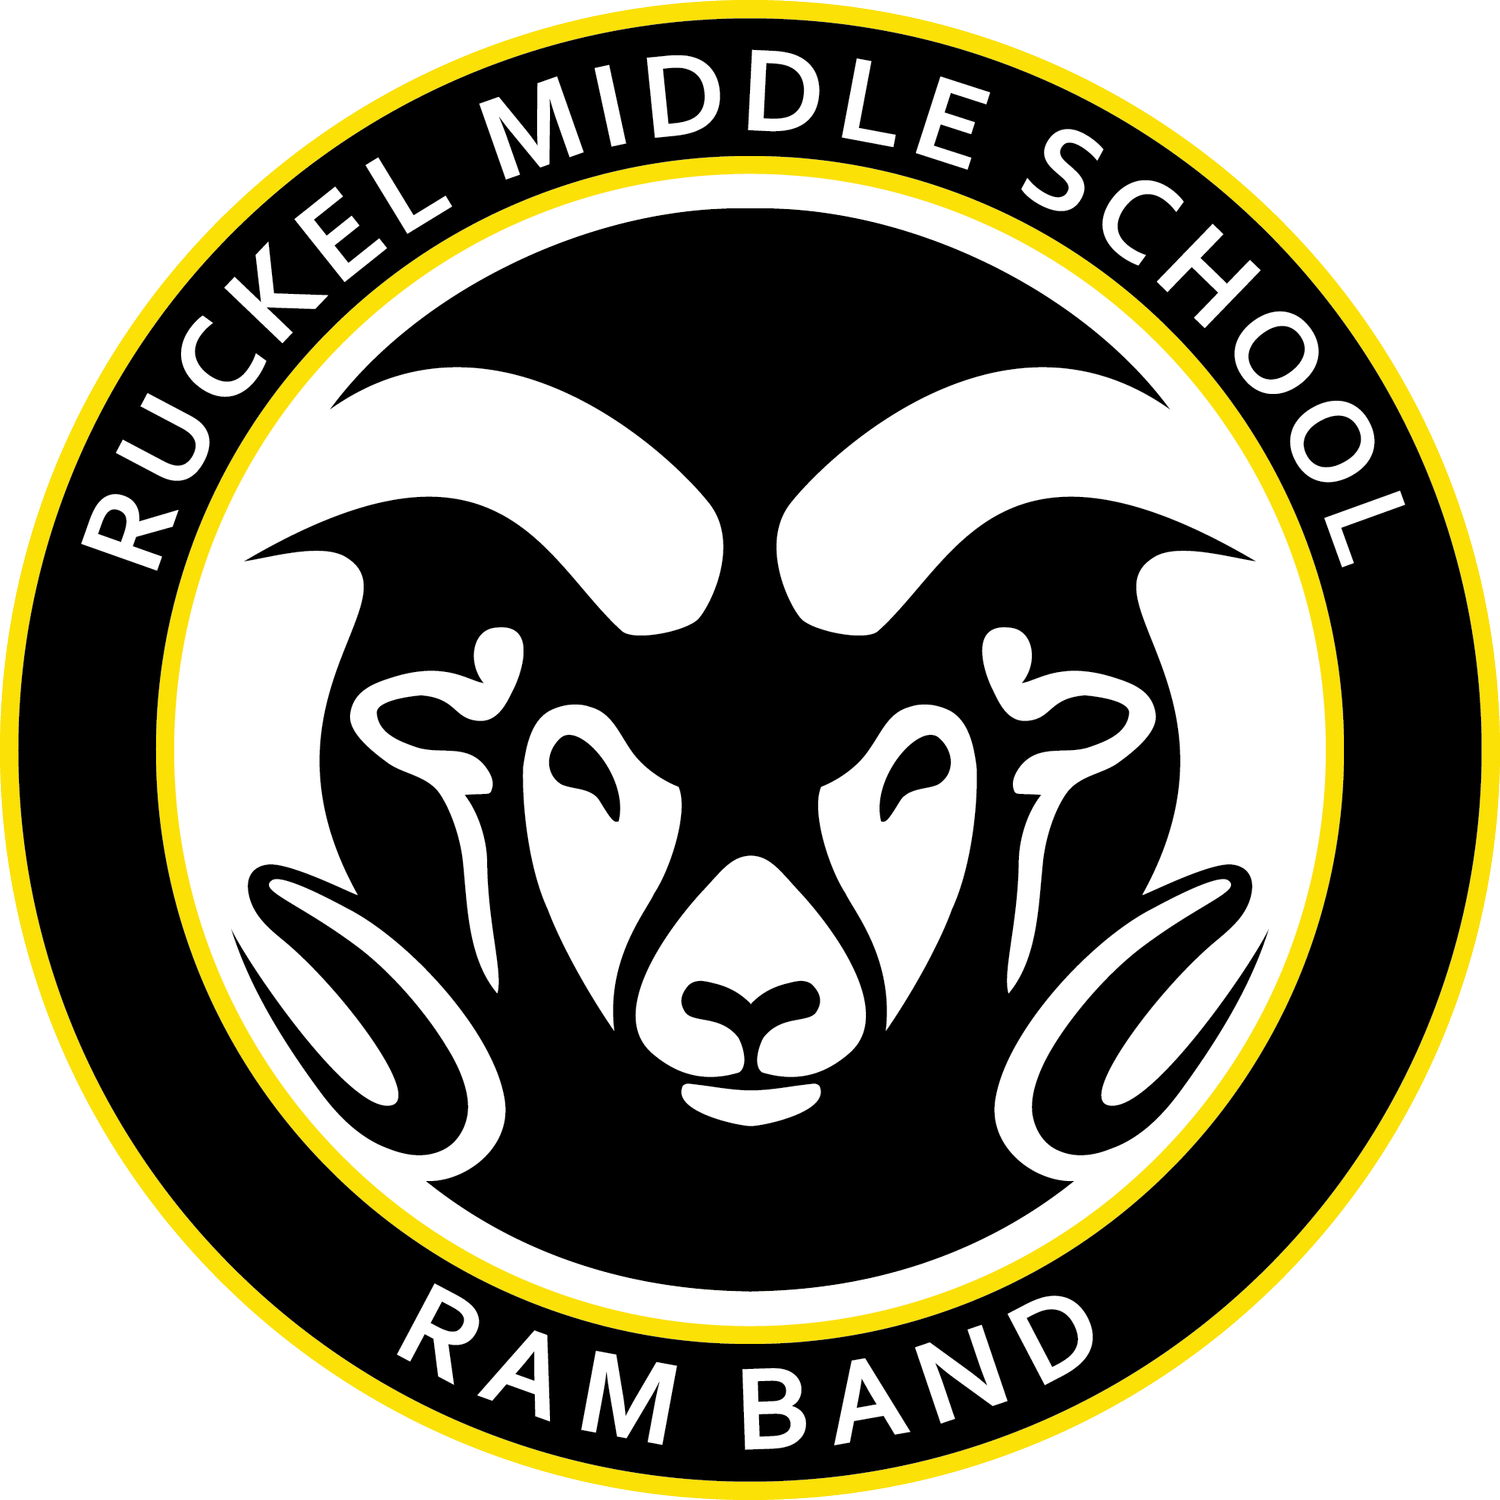 Ruckel Band